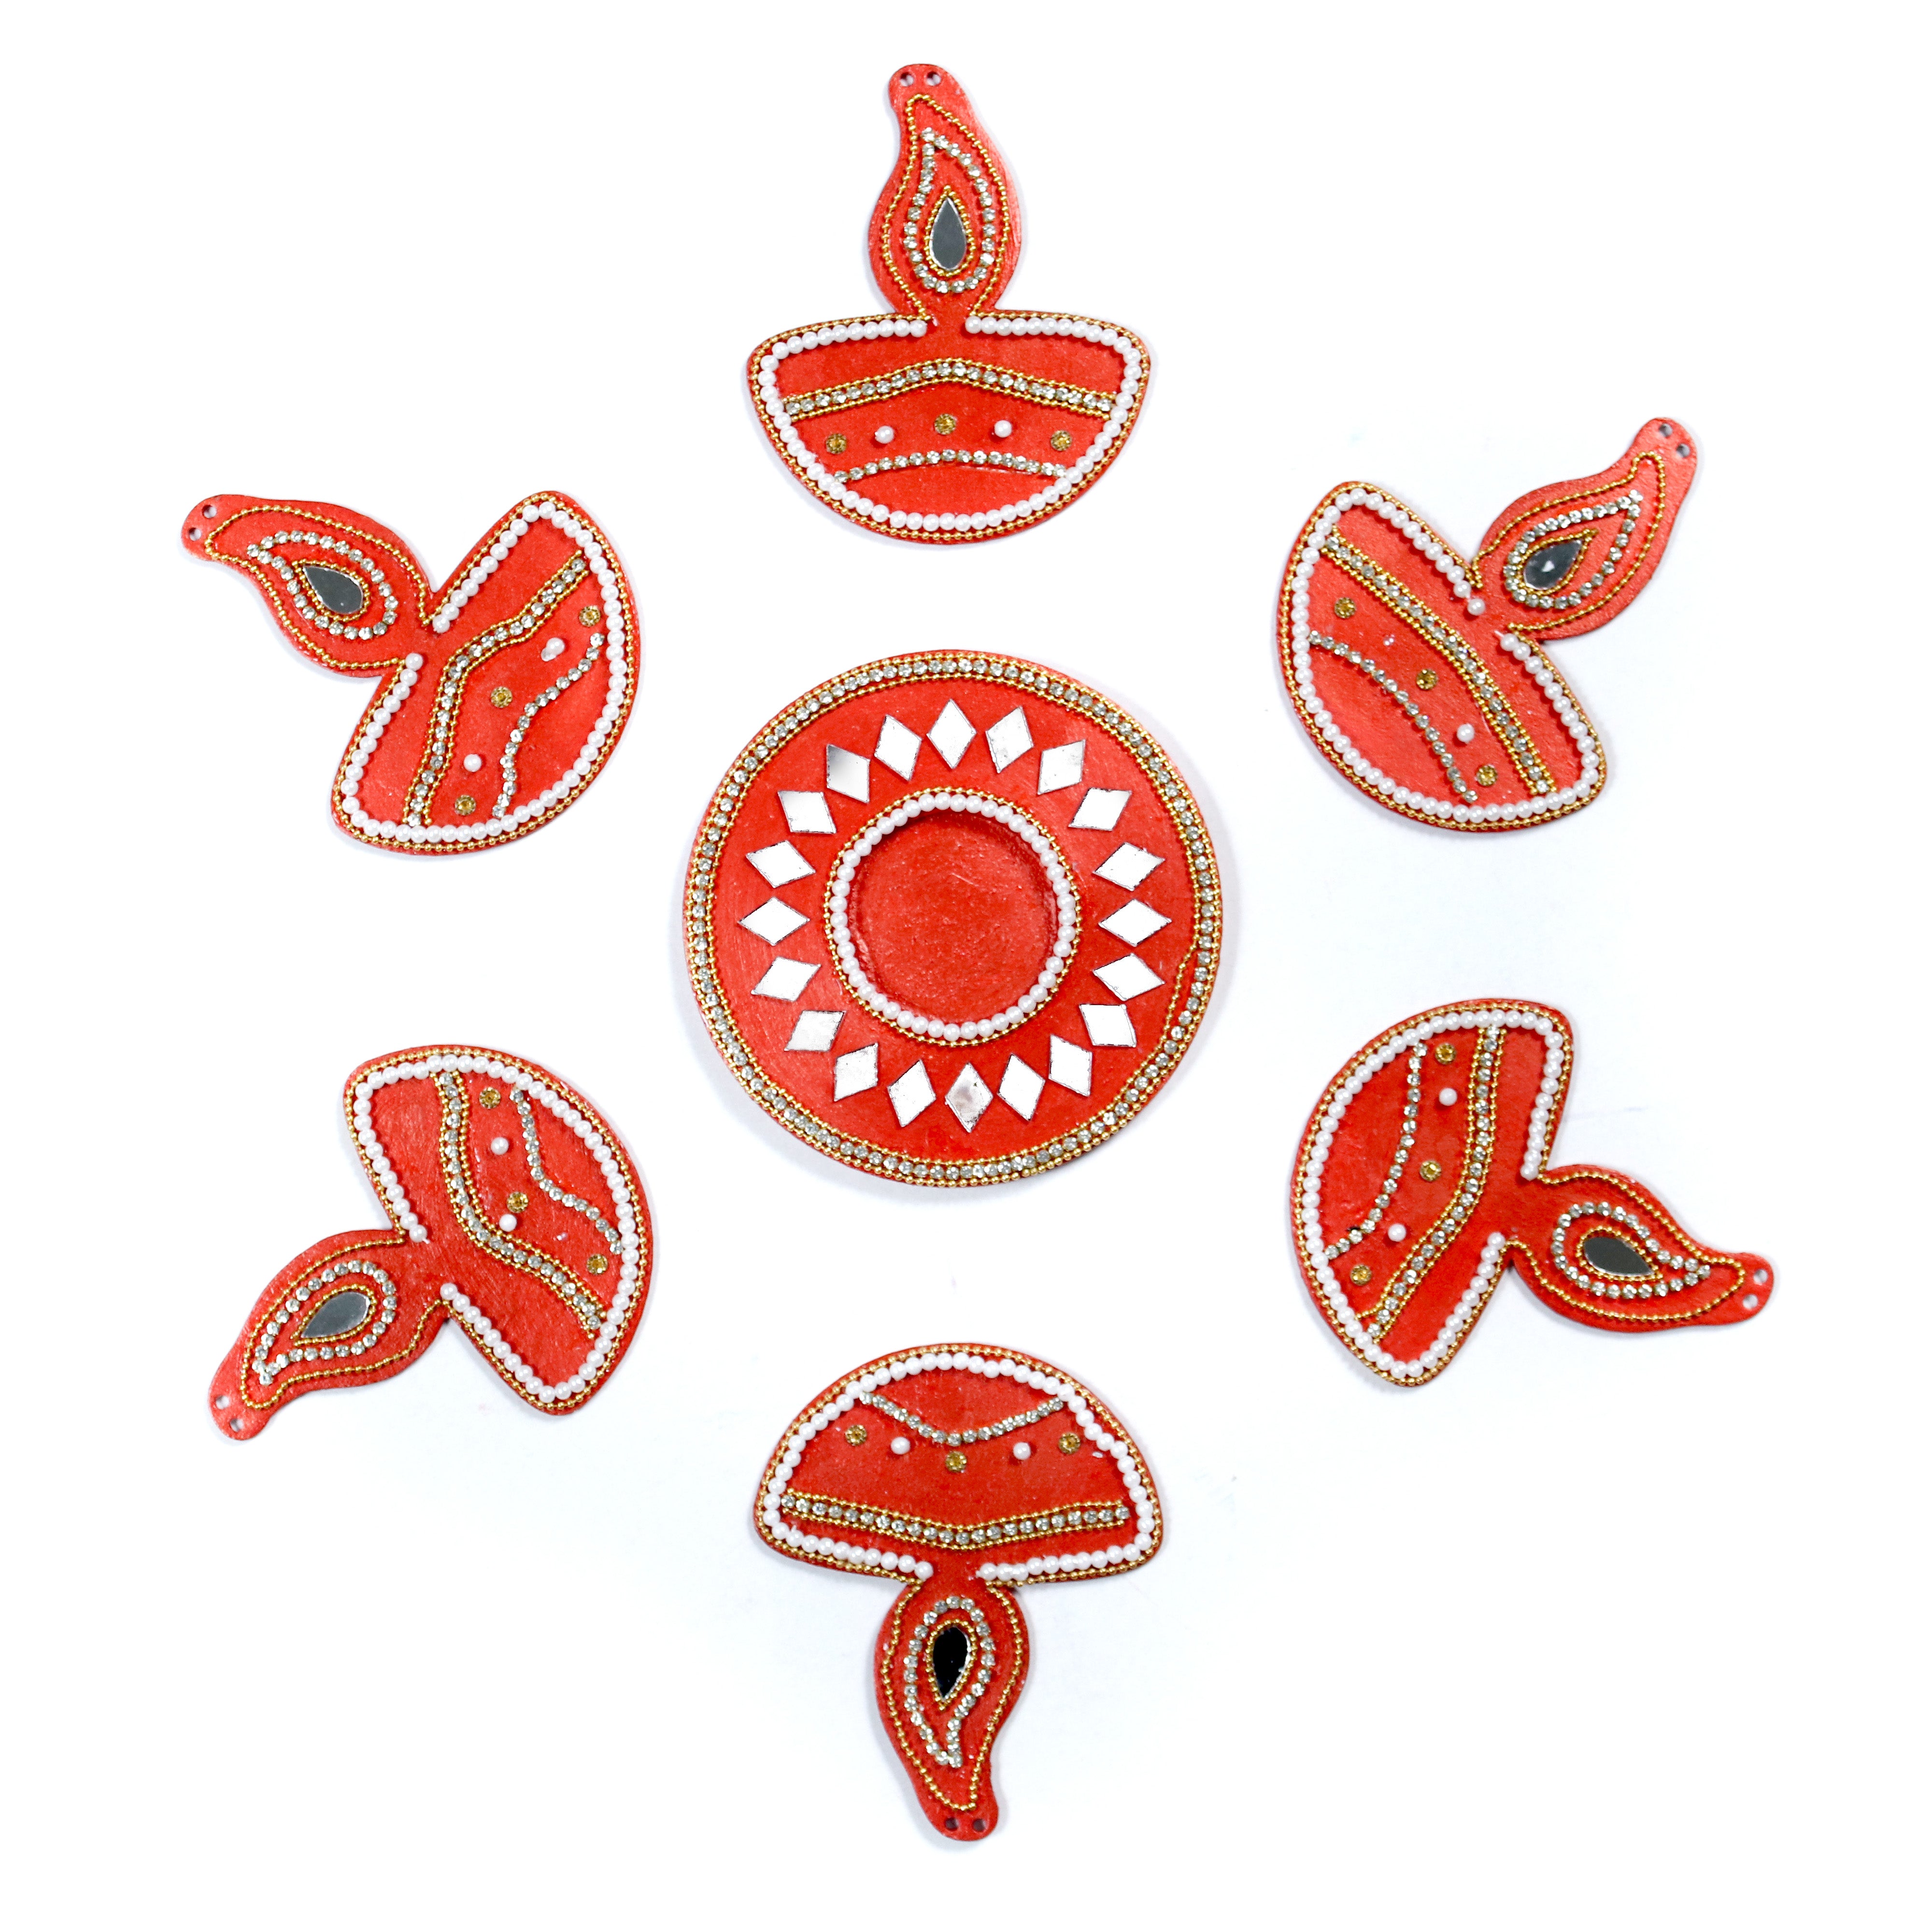 Diwali Decor Combo - Mirror Work Tealight Holder Diamond Delight Red 4in Dia & Ornate Festive Lamp Hanging Decor Red (pack of 7pc)